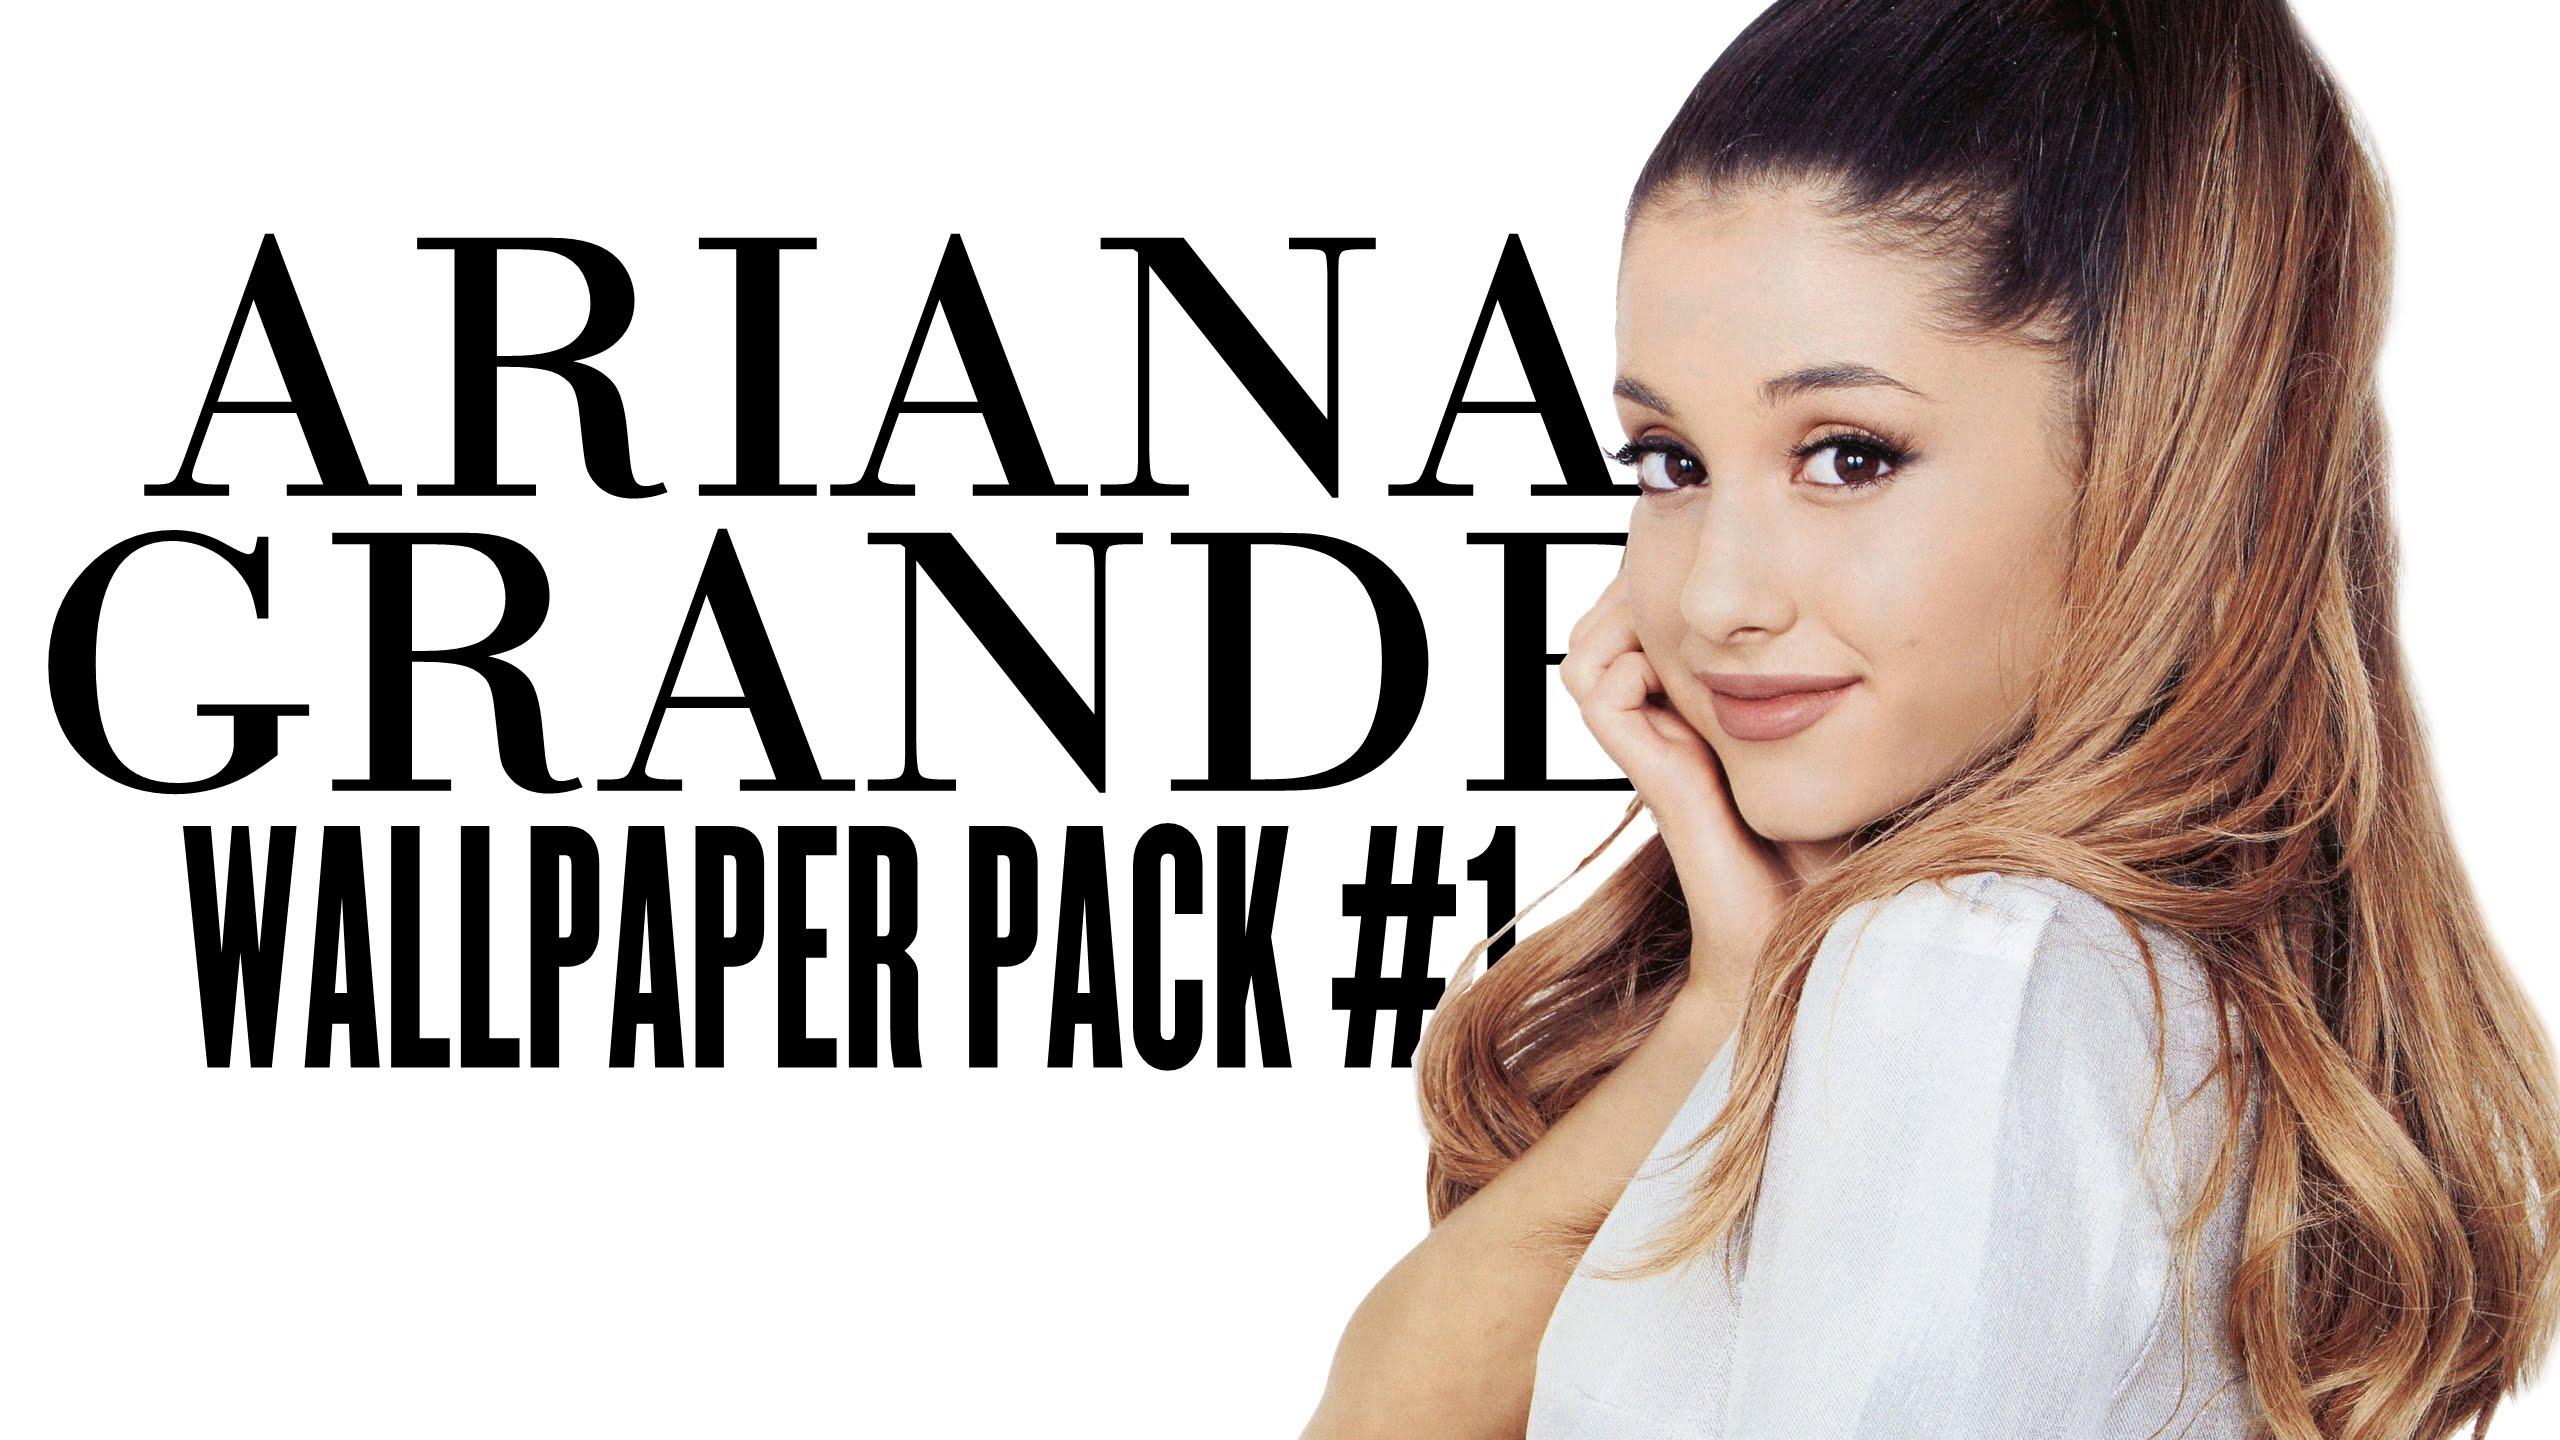 Ariana grande wallpaper pack 1 dl youtube HD Wallpaper